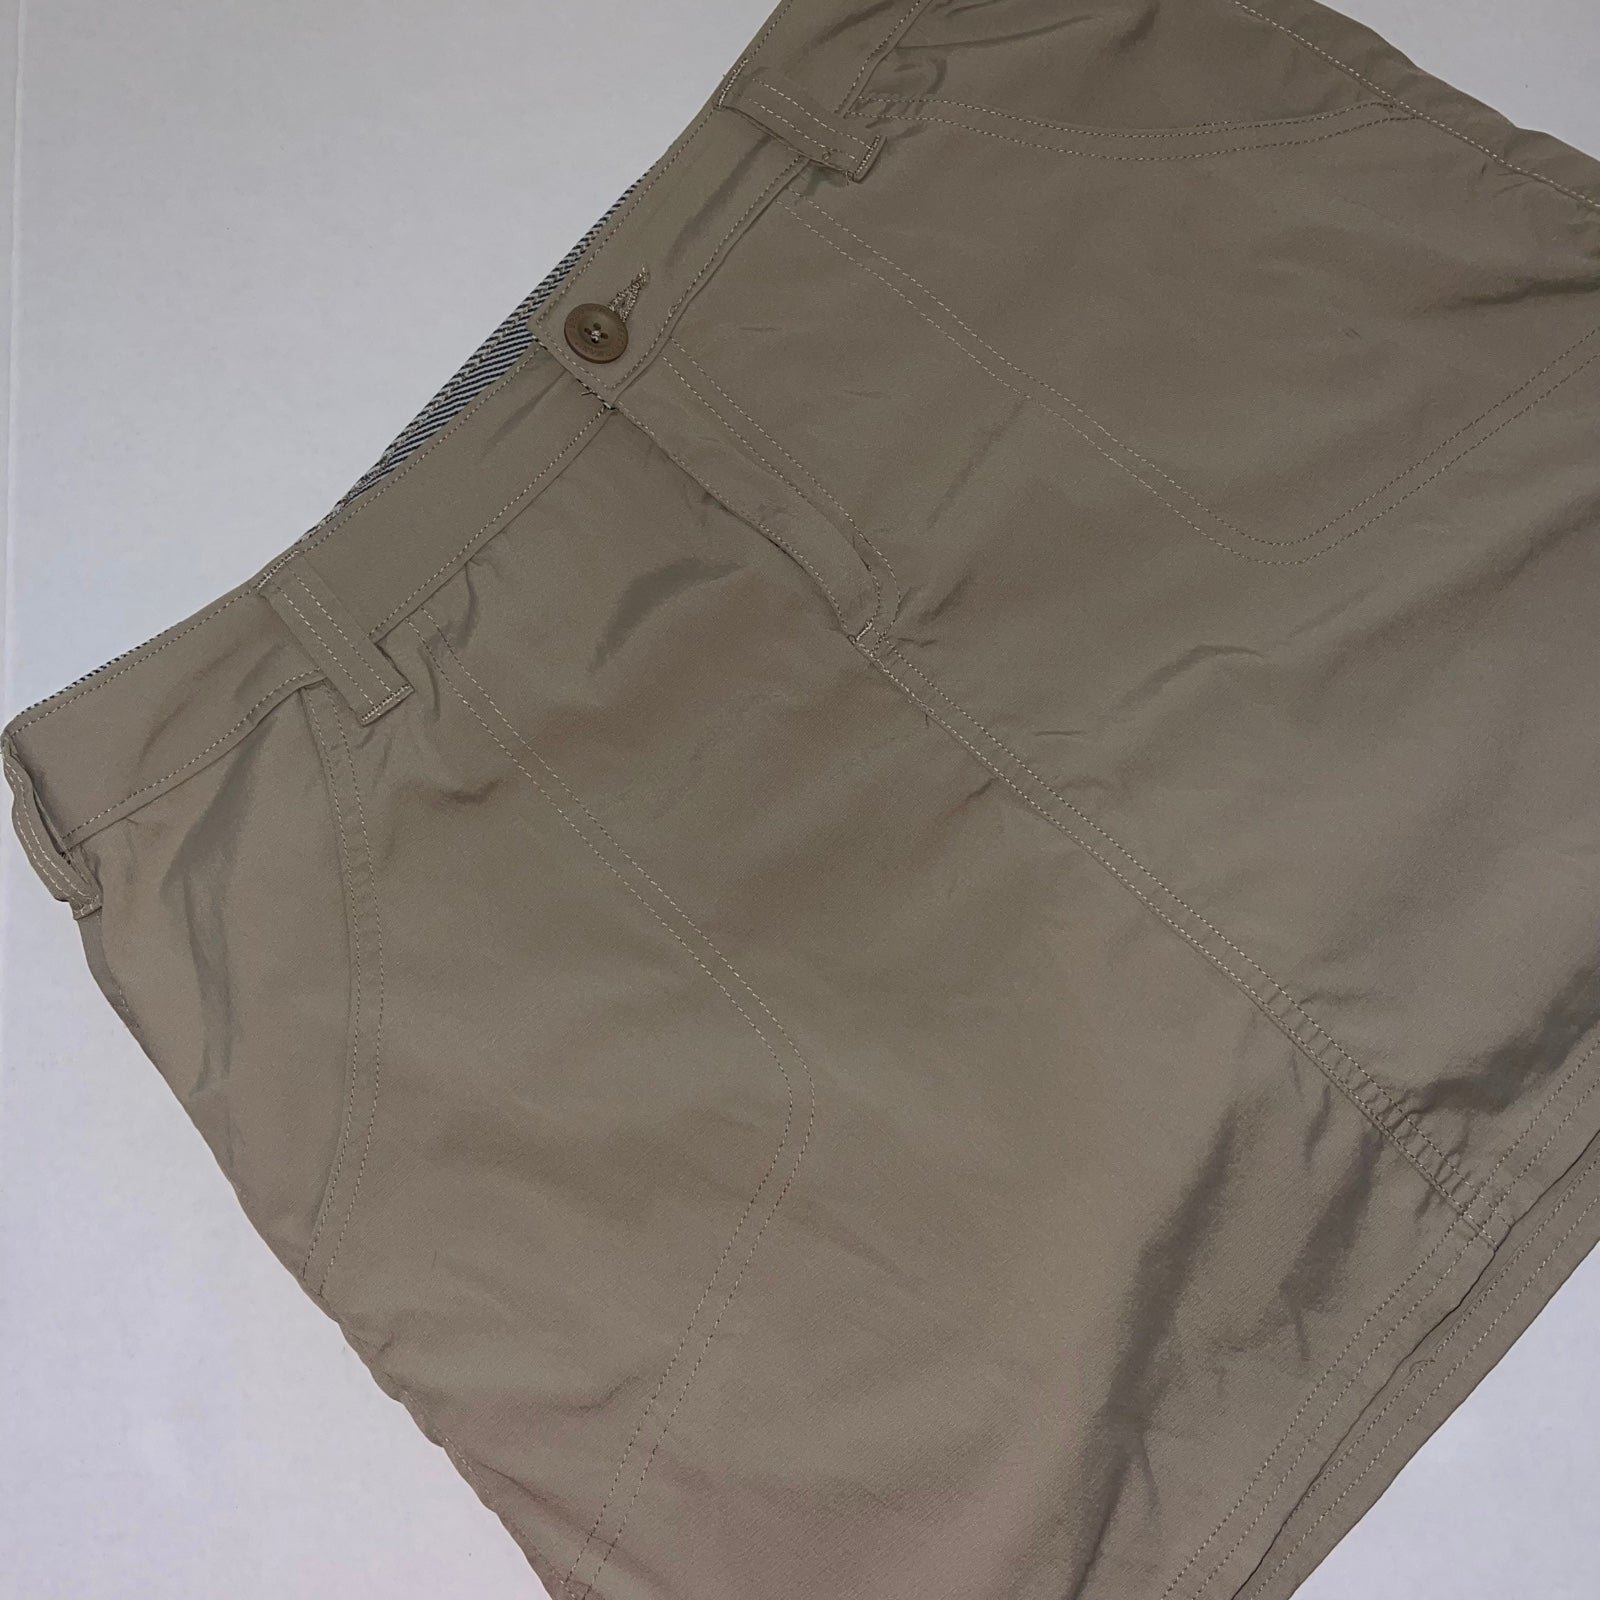 Special offer  World Wide Sportsman Skort Beige Golf Tennis Hike Athletic Skirt Short Size 10 lAeF9eIOV Everyday Low Prices